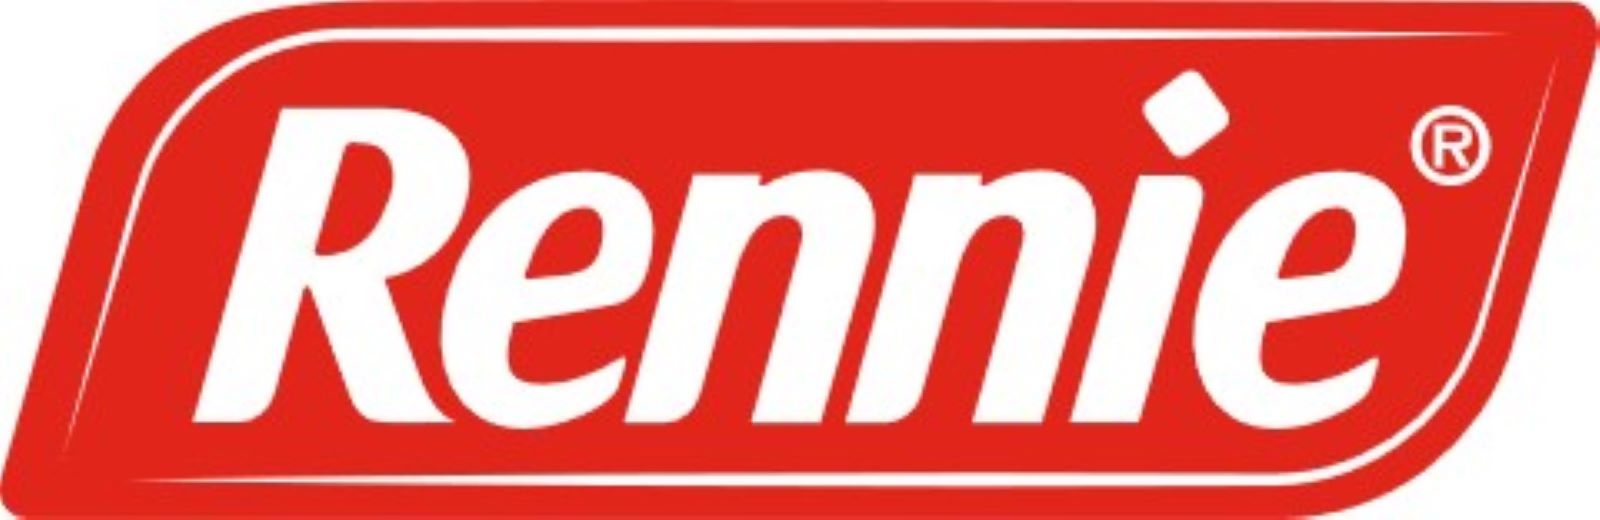 Rennie® Antacidum Spearmint-Lutschtabletten